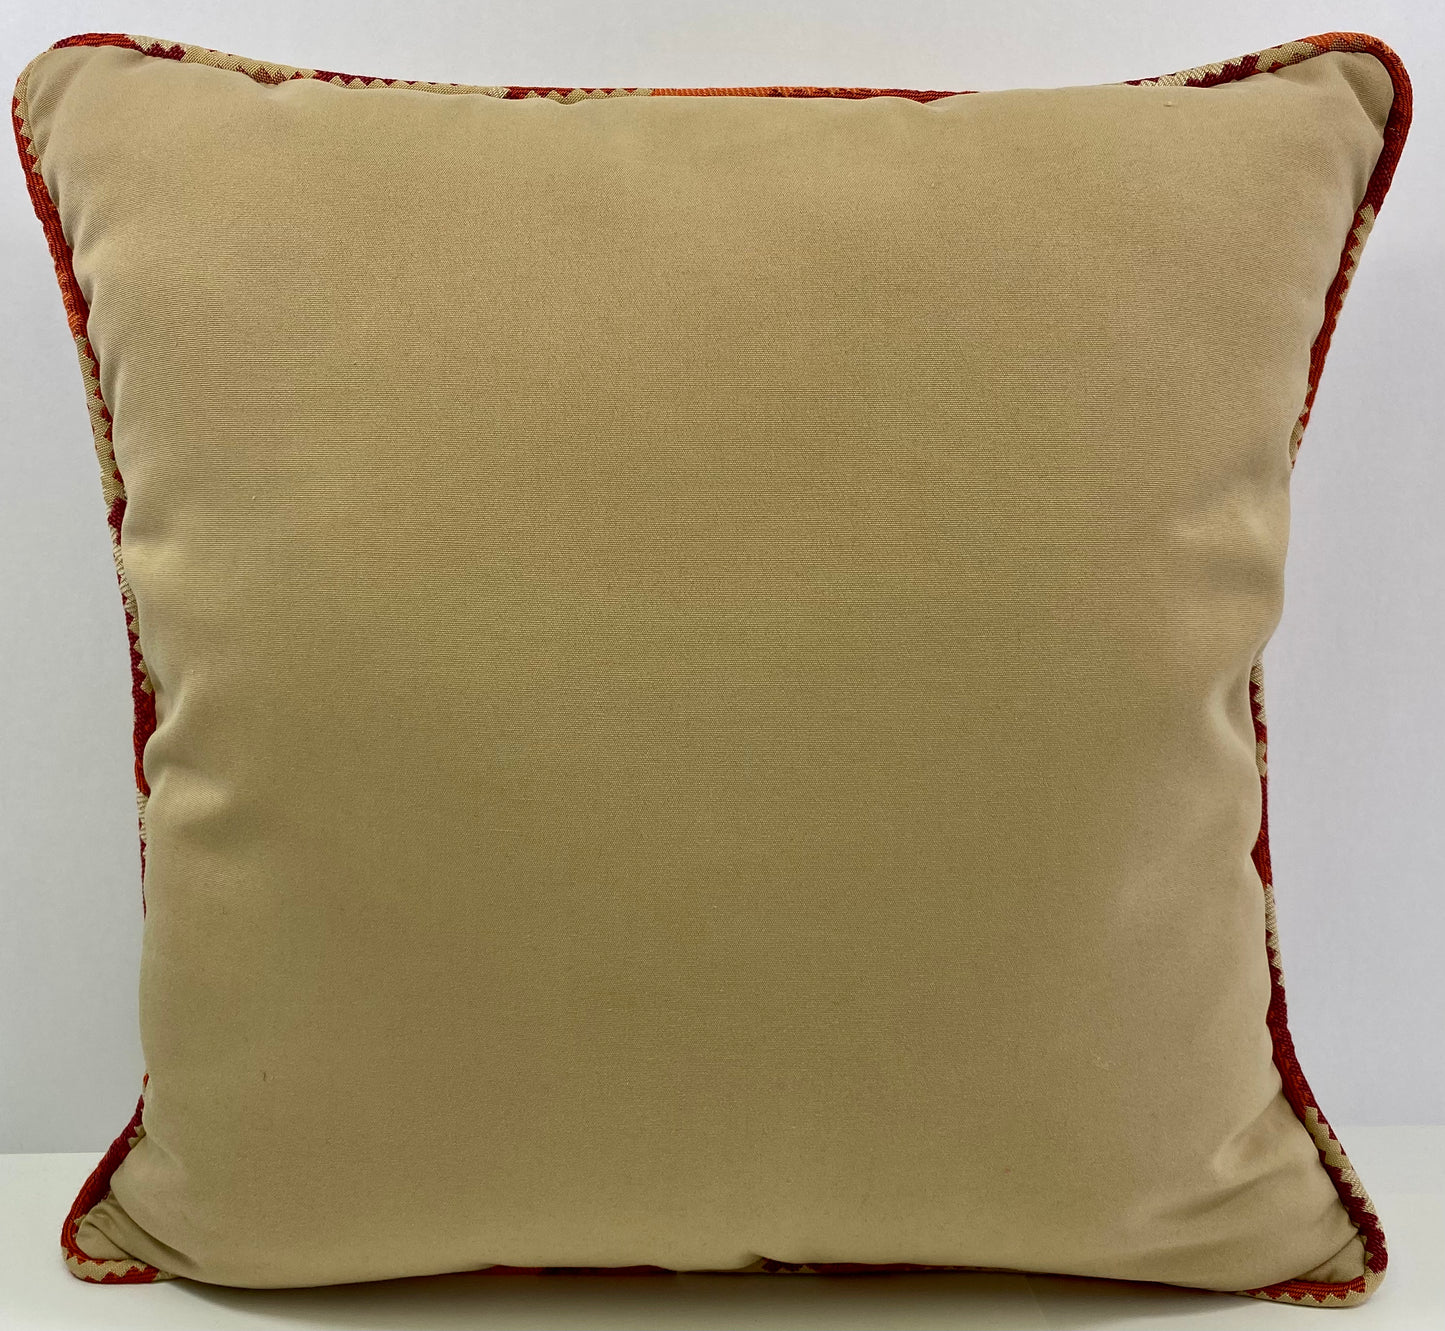 Luxury Outdoor Pillow - 22" x 22" - Rancho Santa Fe-Tan; Sunbrella, or equivalent, fabric with poly fill